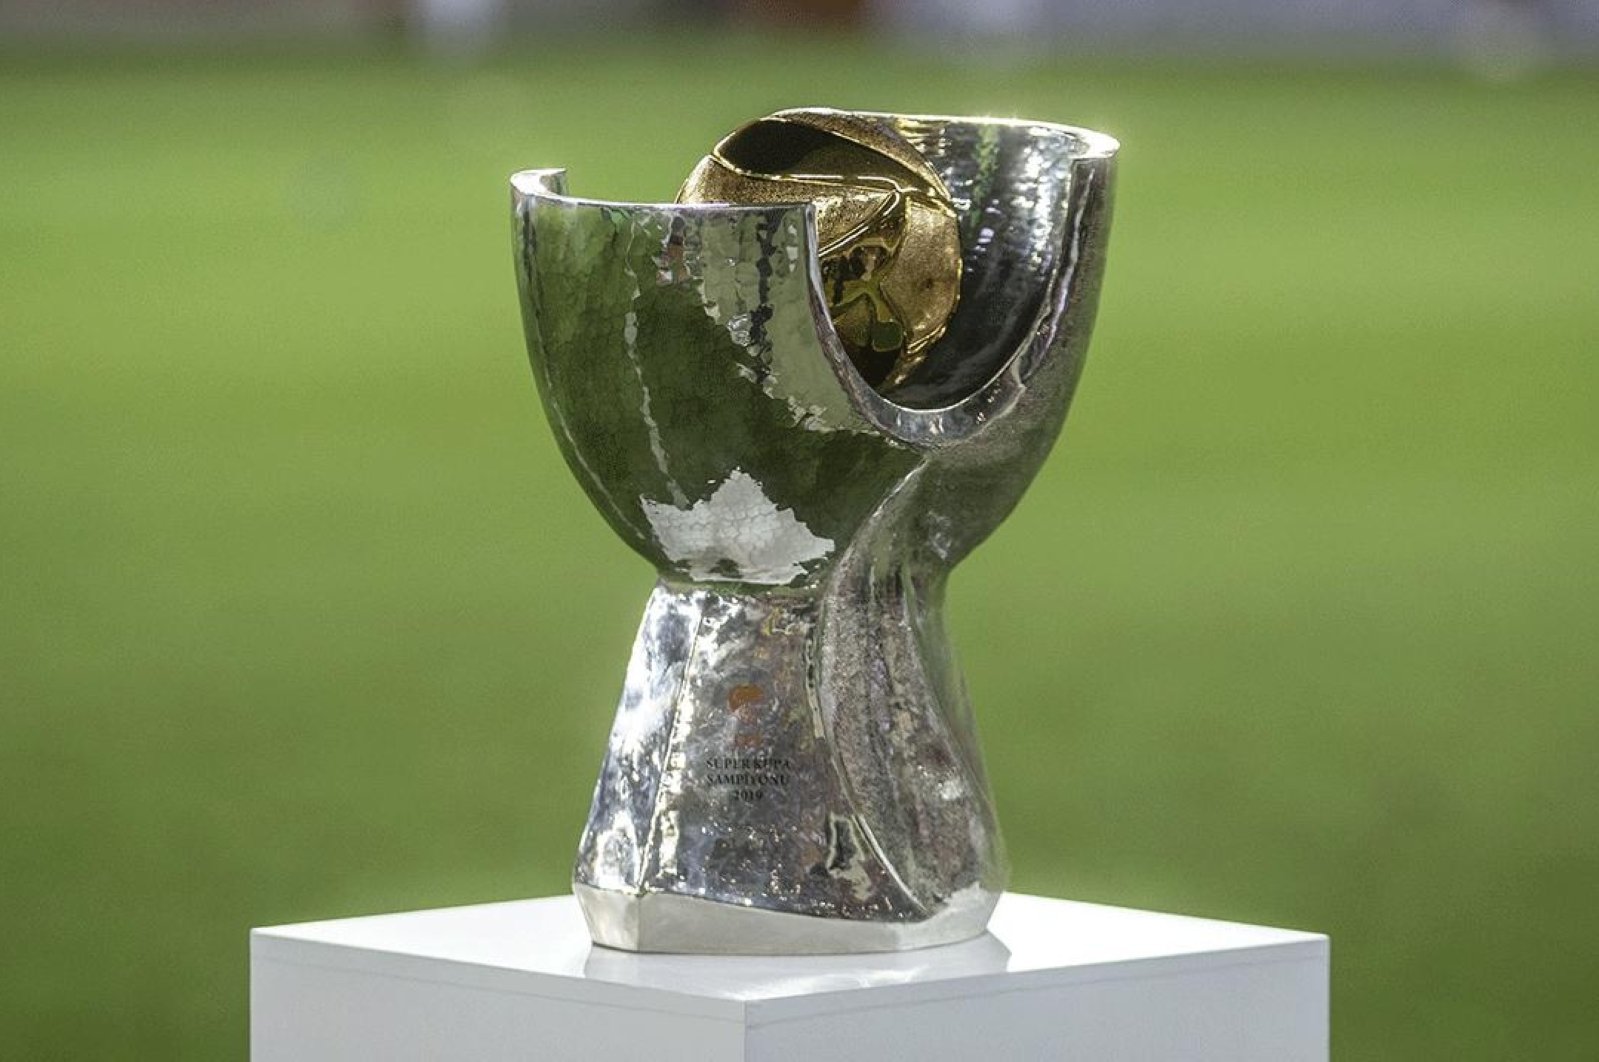 Beşiktaş, Antalyaspor untuk memperebutkan Piala Super Turki di Doha